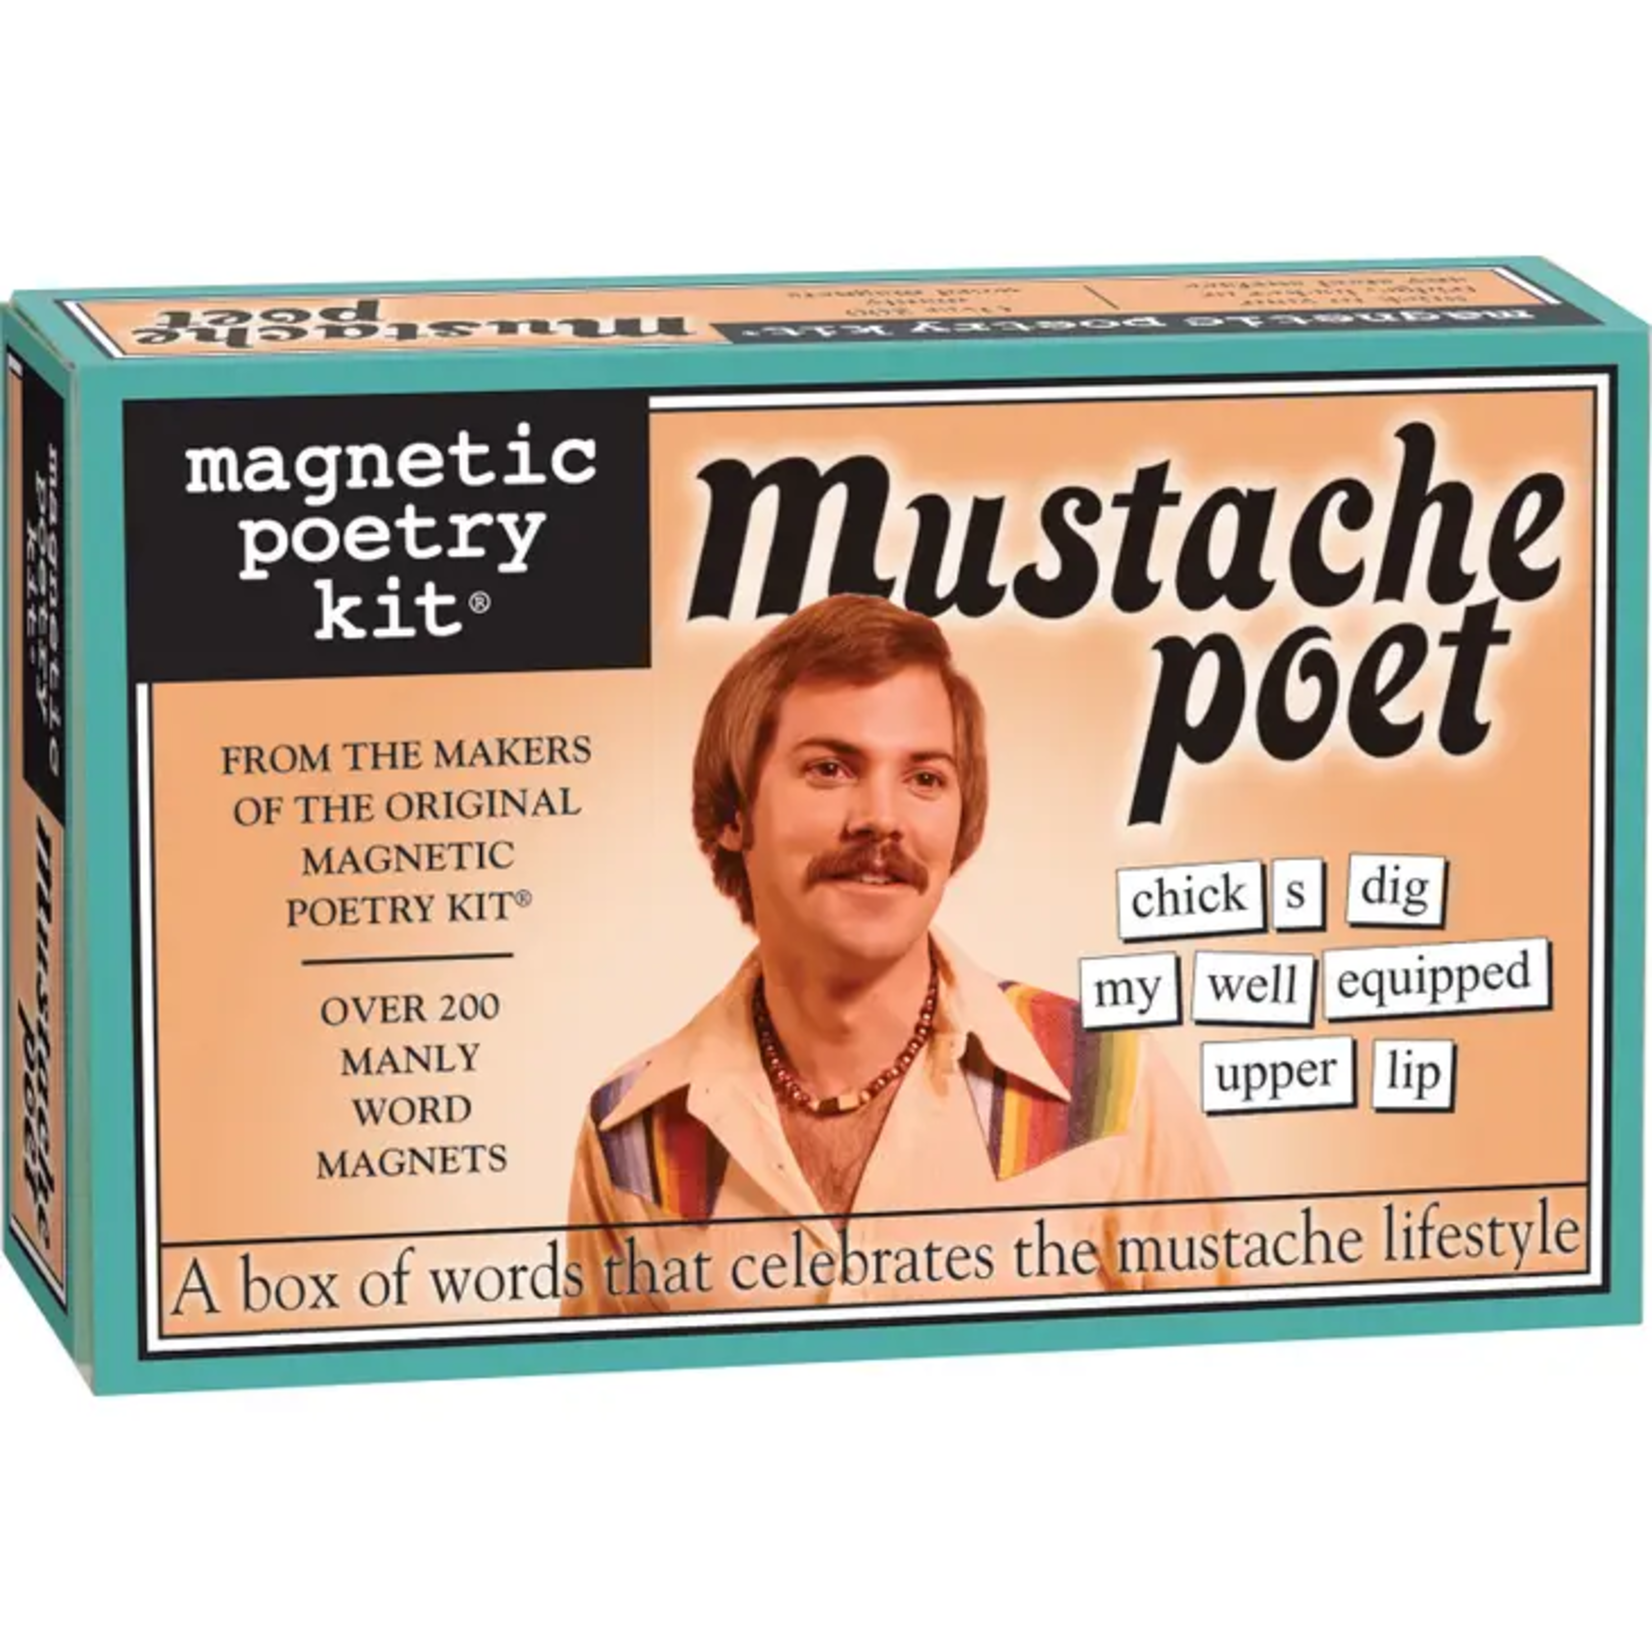 Mustache Poet Magnetic Poetry